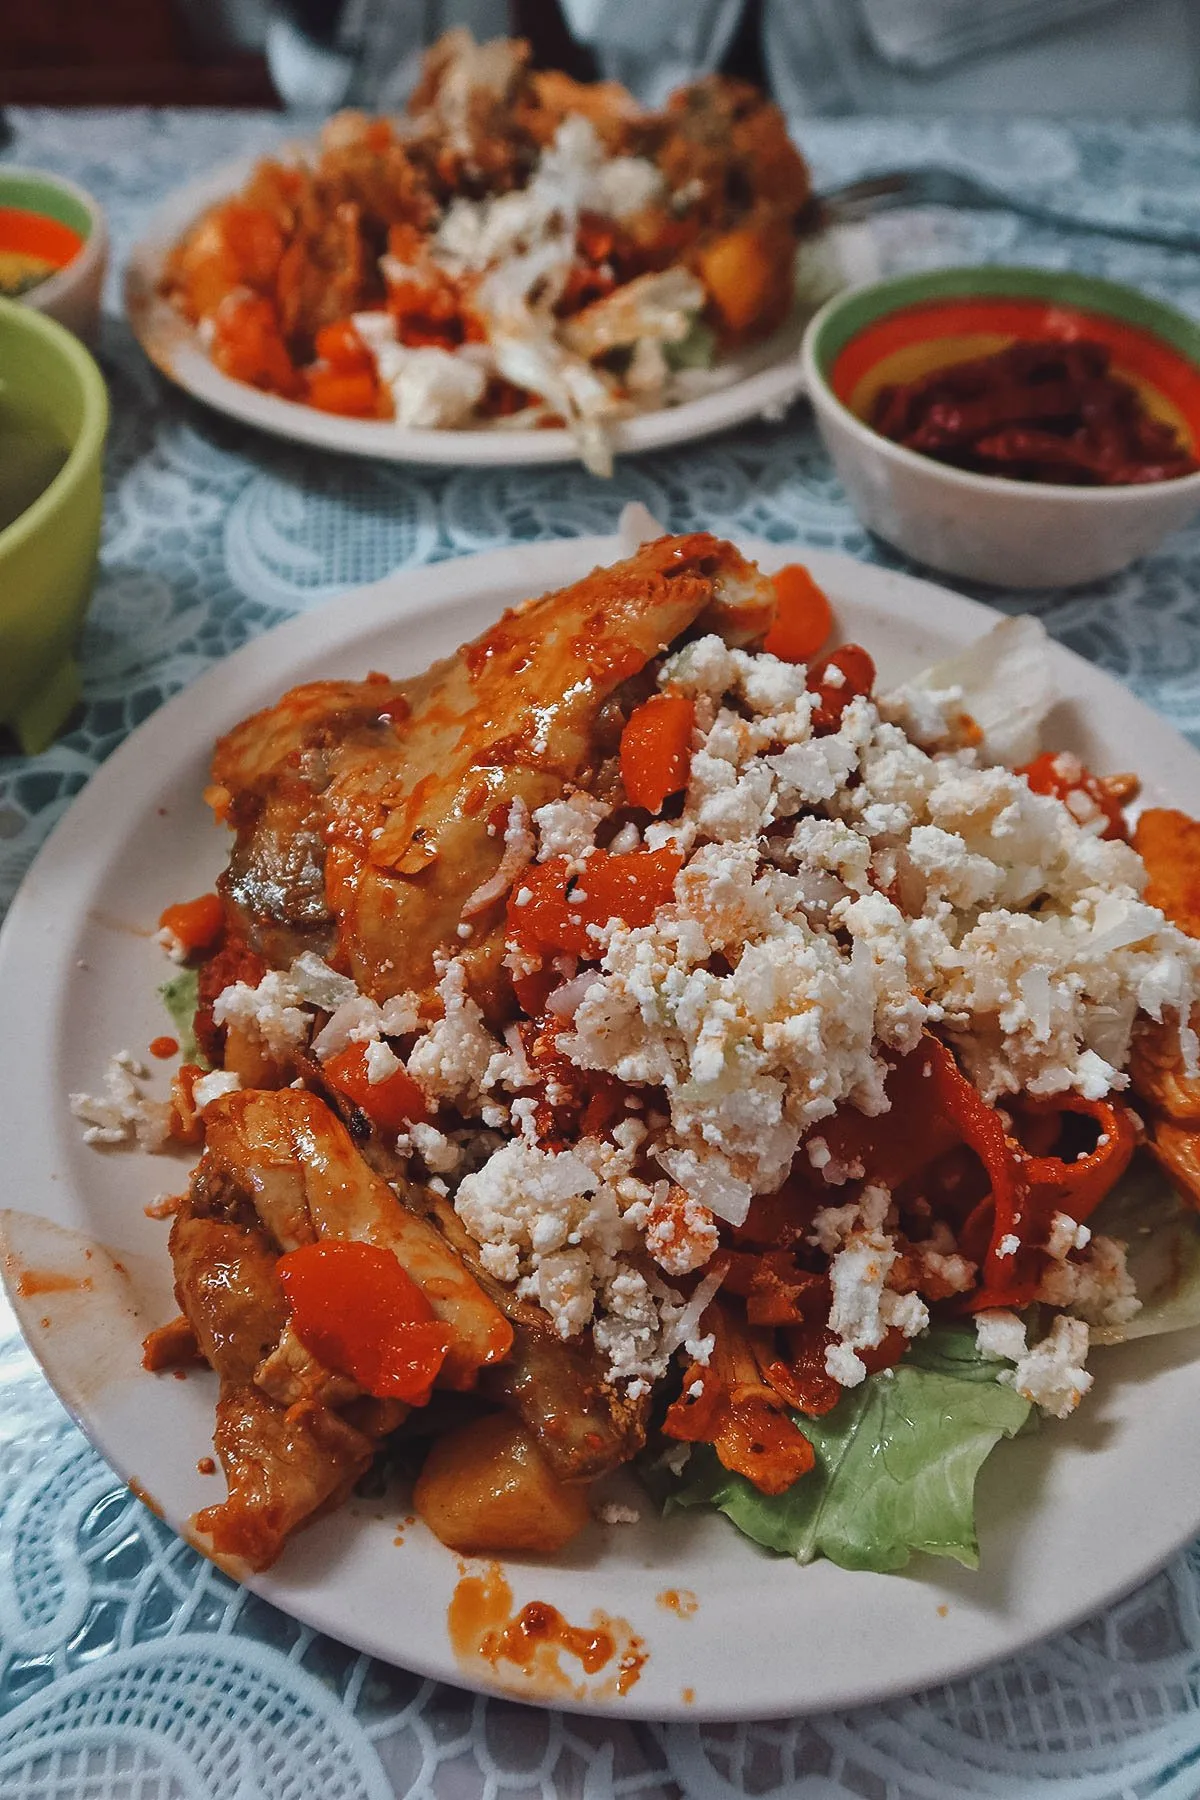 Enchiladas mineras, a tasty Mexican dish from Guanajuato